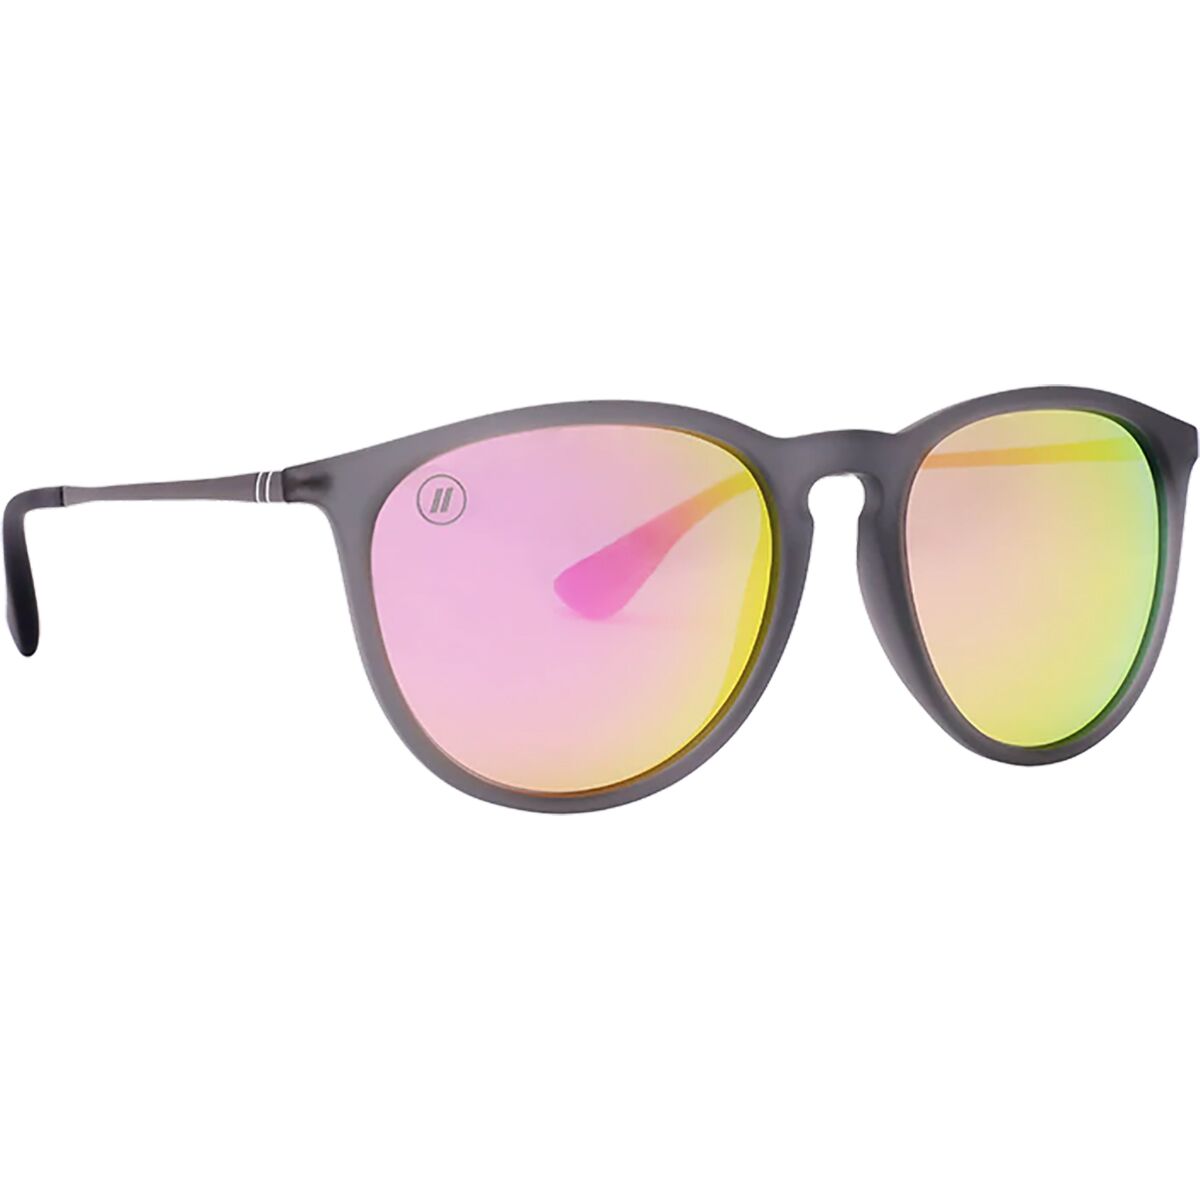 Blenders Eyewear Lemonade Fog North Park Polarized Sunglasses - Women's